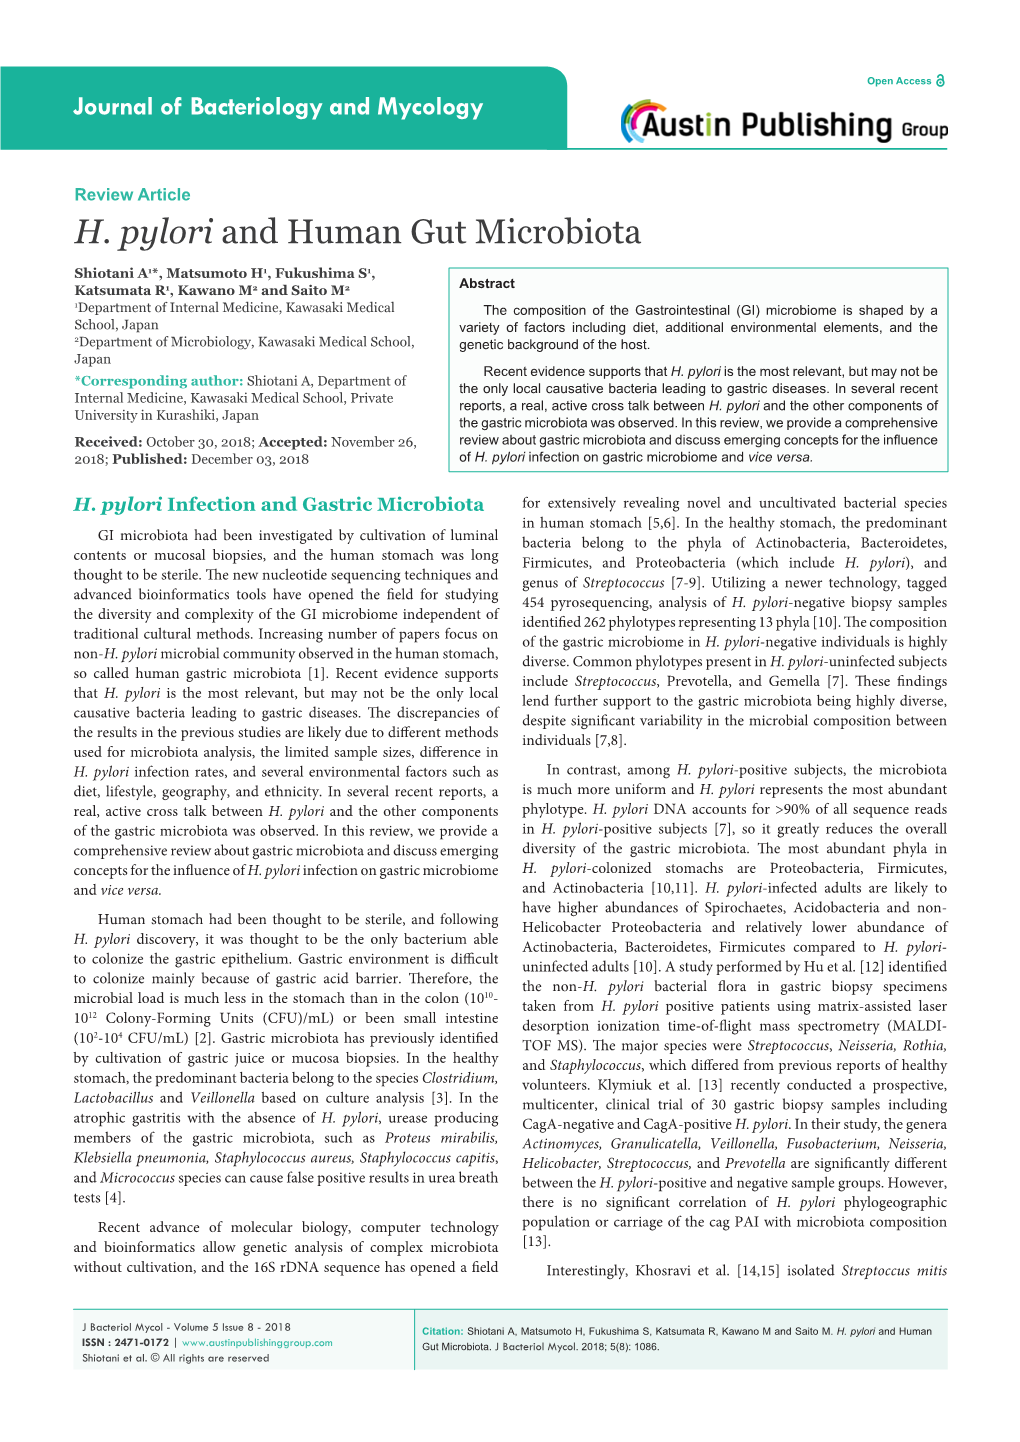 H. Pylori and Human Gut Microbiota